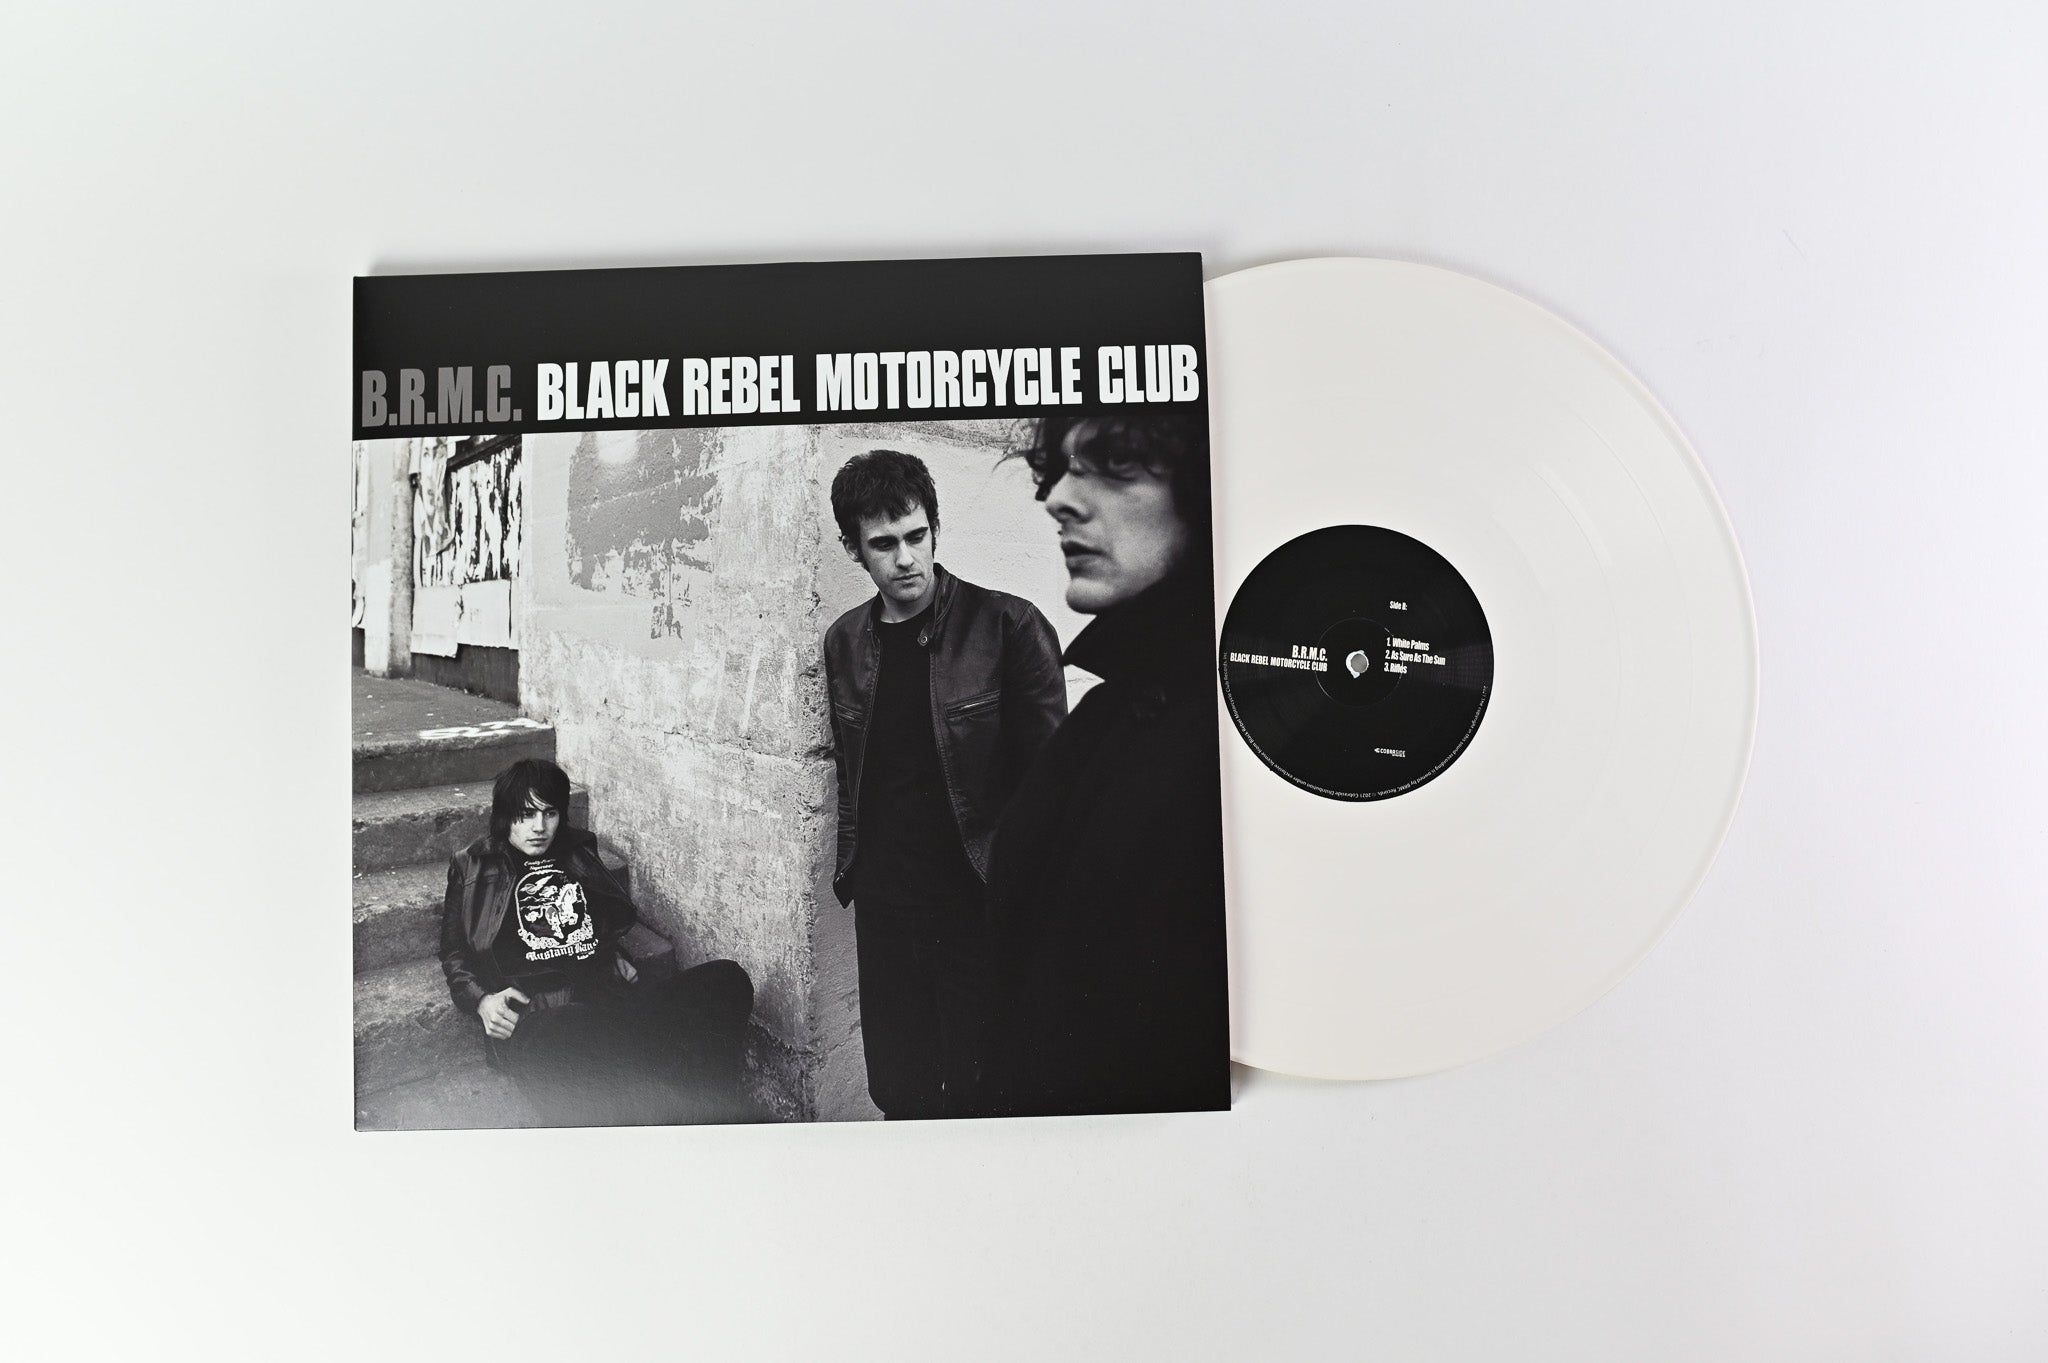 Black Rebel Motorcycle Club - B.R.M.C. Deluxe Edition Box Set on Cobraside Distribution Cream Vinyl